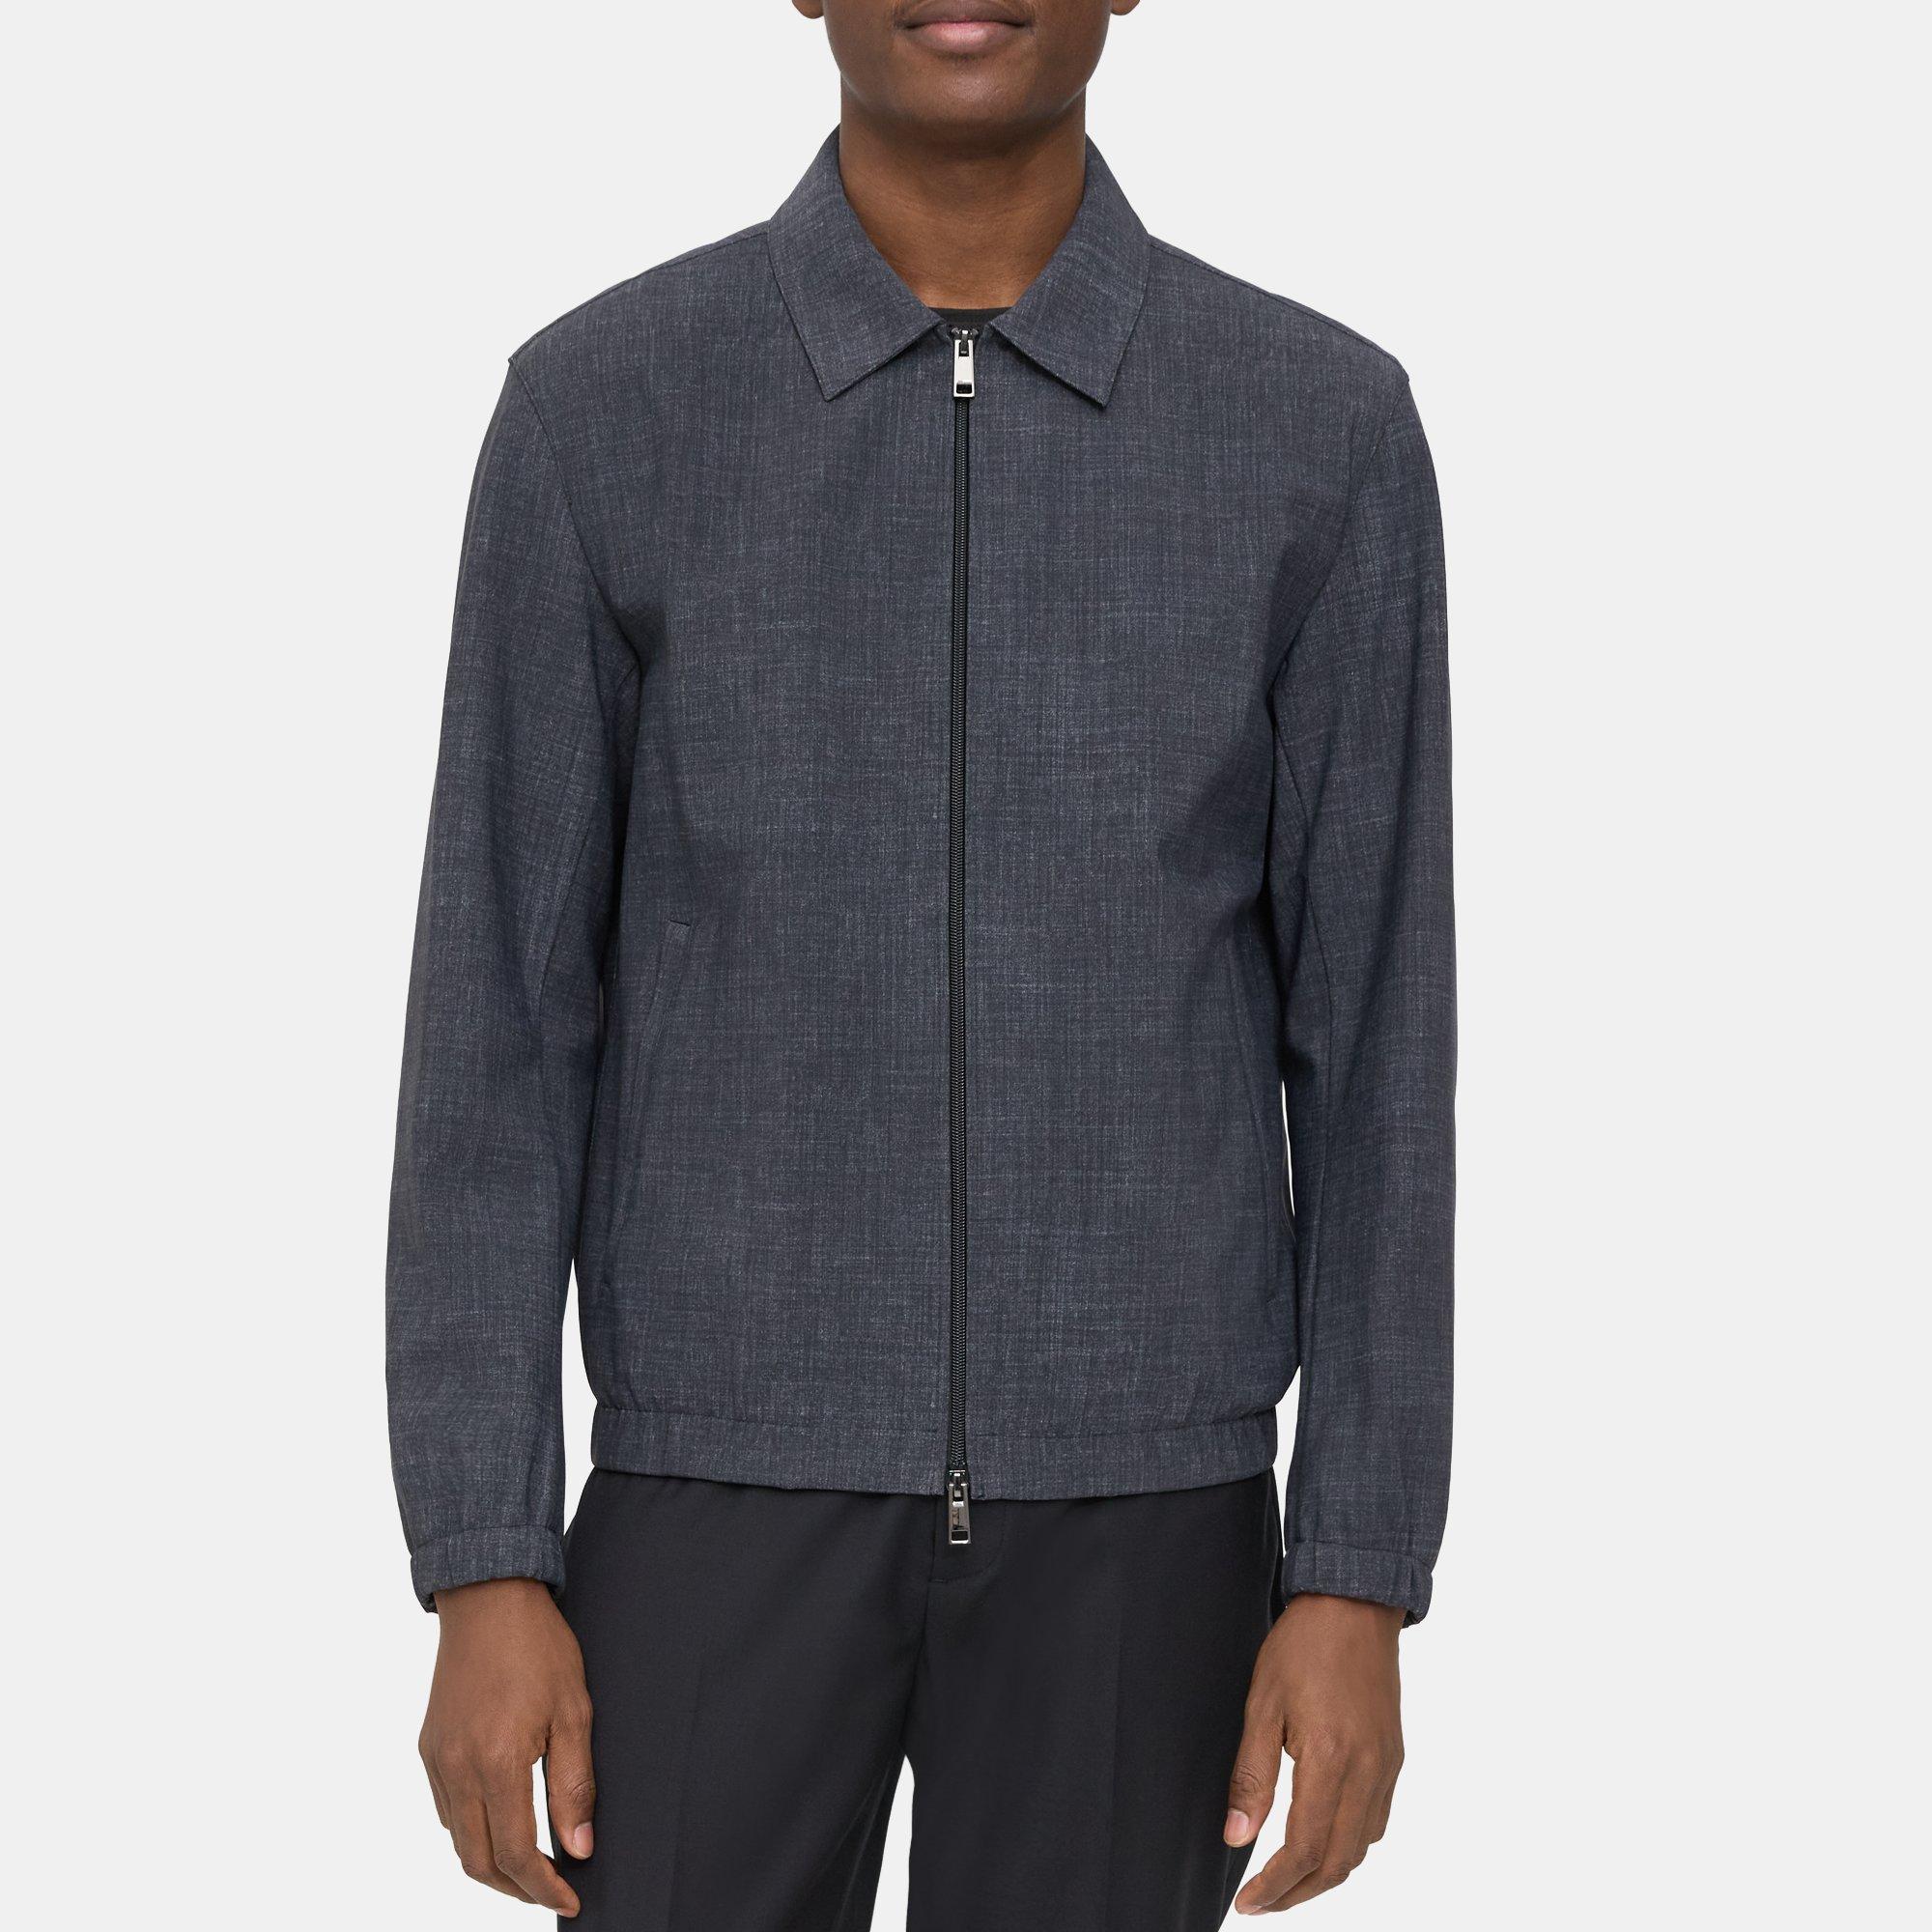 Theory Blouson Jacket In Printed Performance Knit In Grey Melange